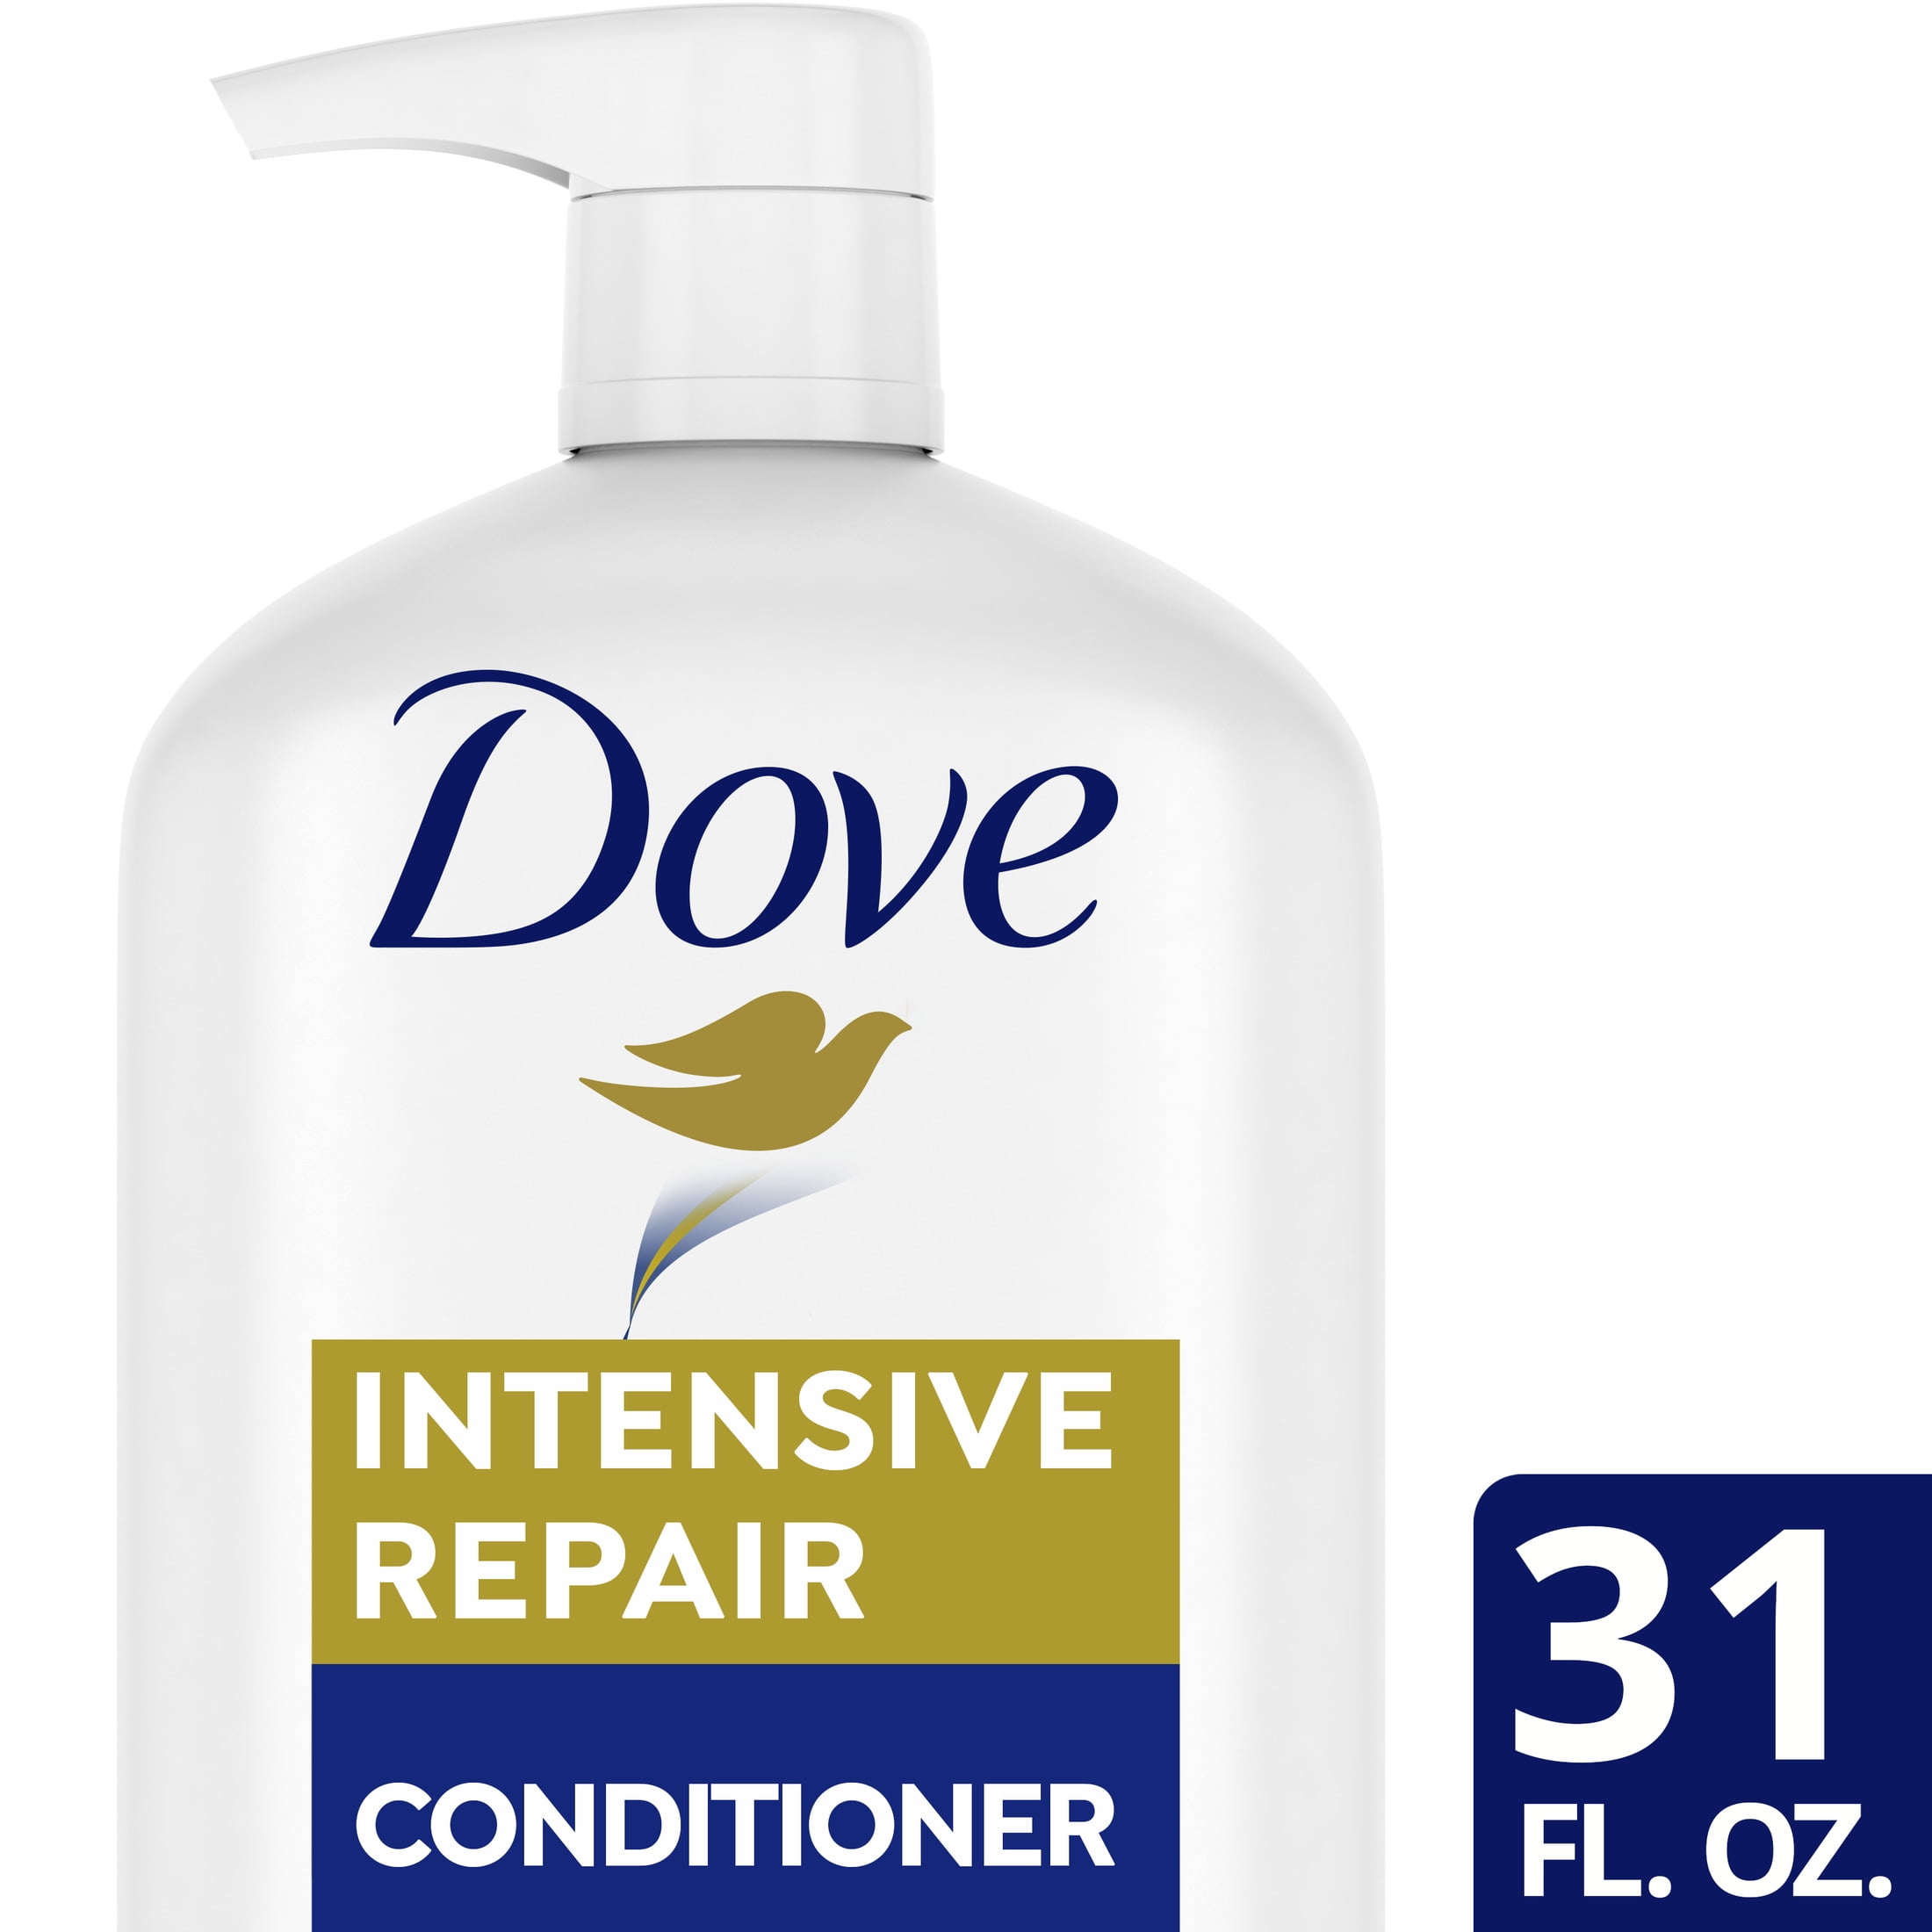 Dove Intensive Repair Conditioner Revives Damaged Hair 31 fl oz